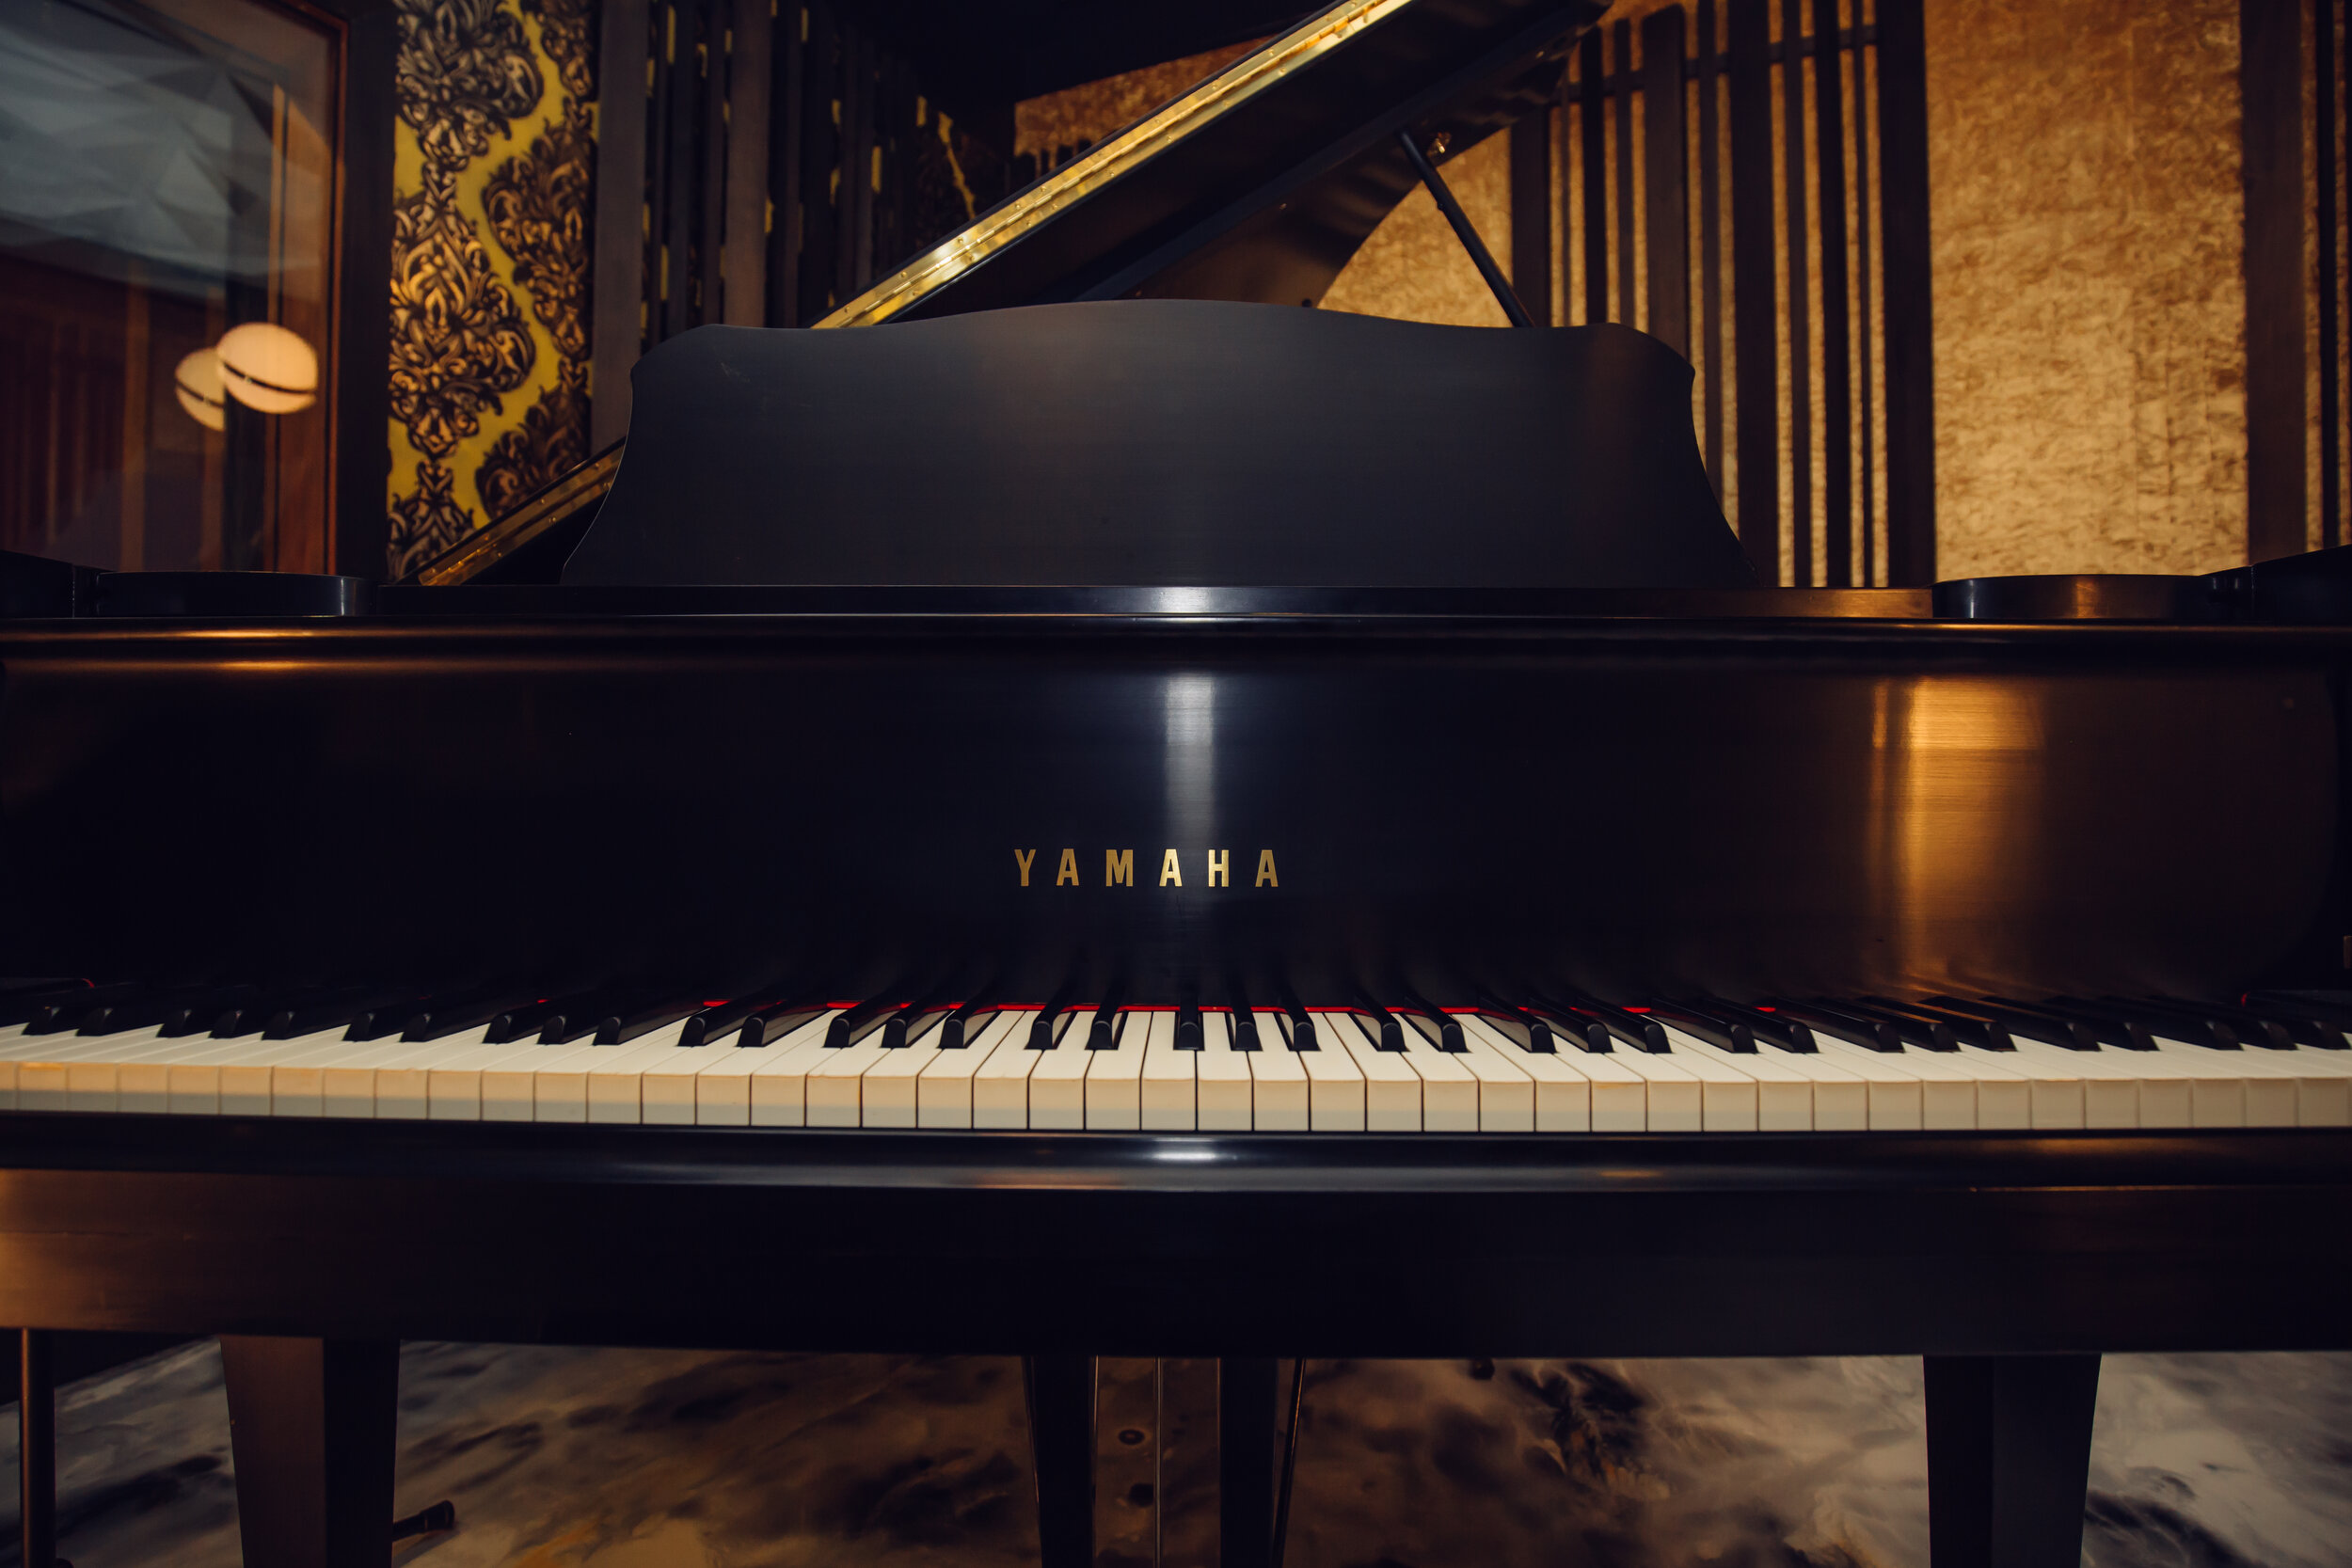 Indianapolis Music Composition & Piano Studio: Round Table Recording